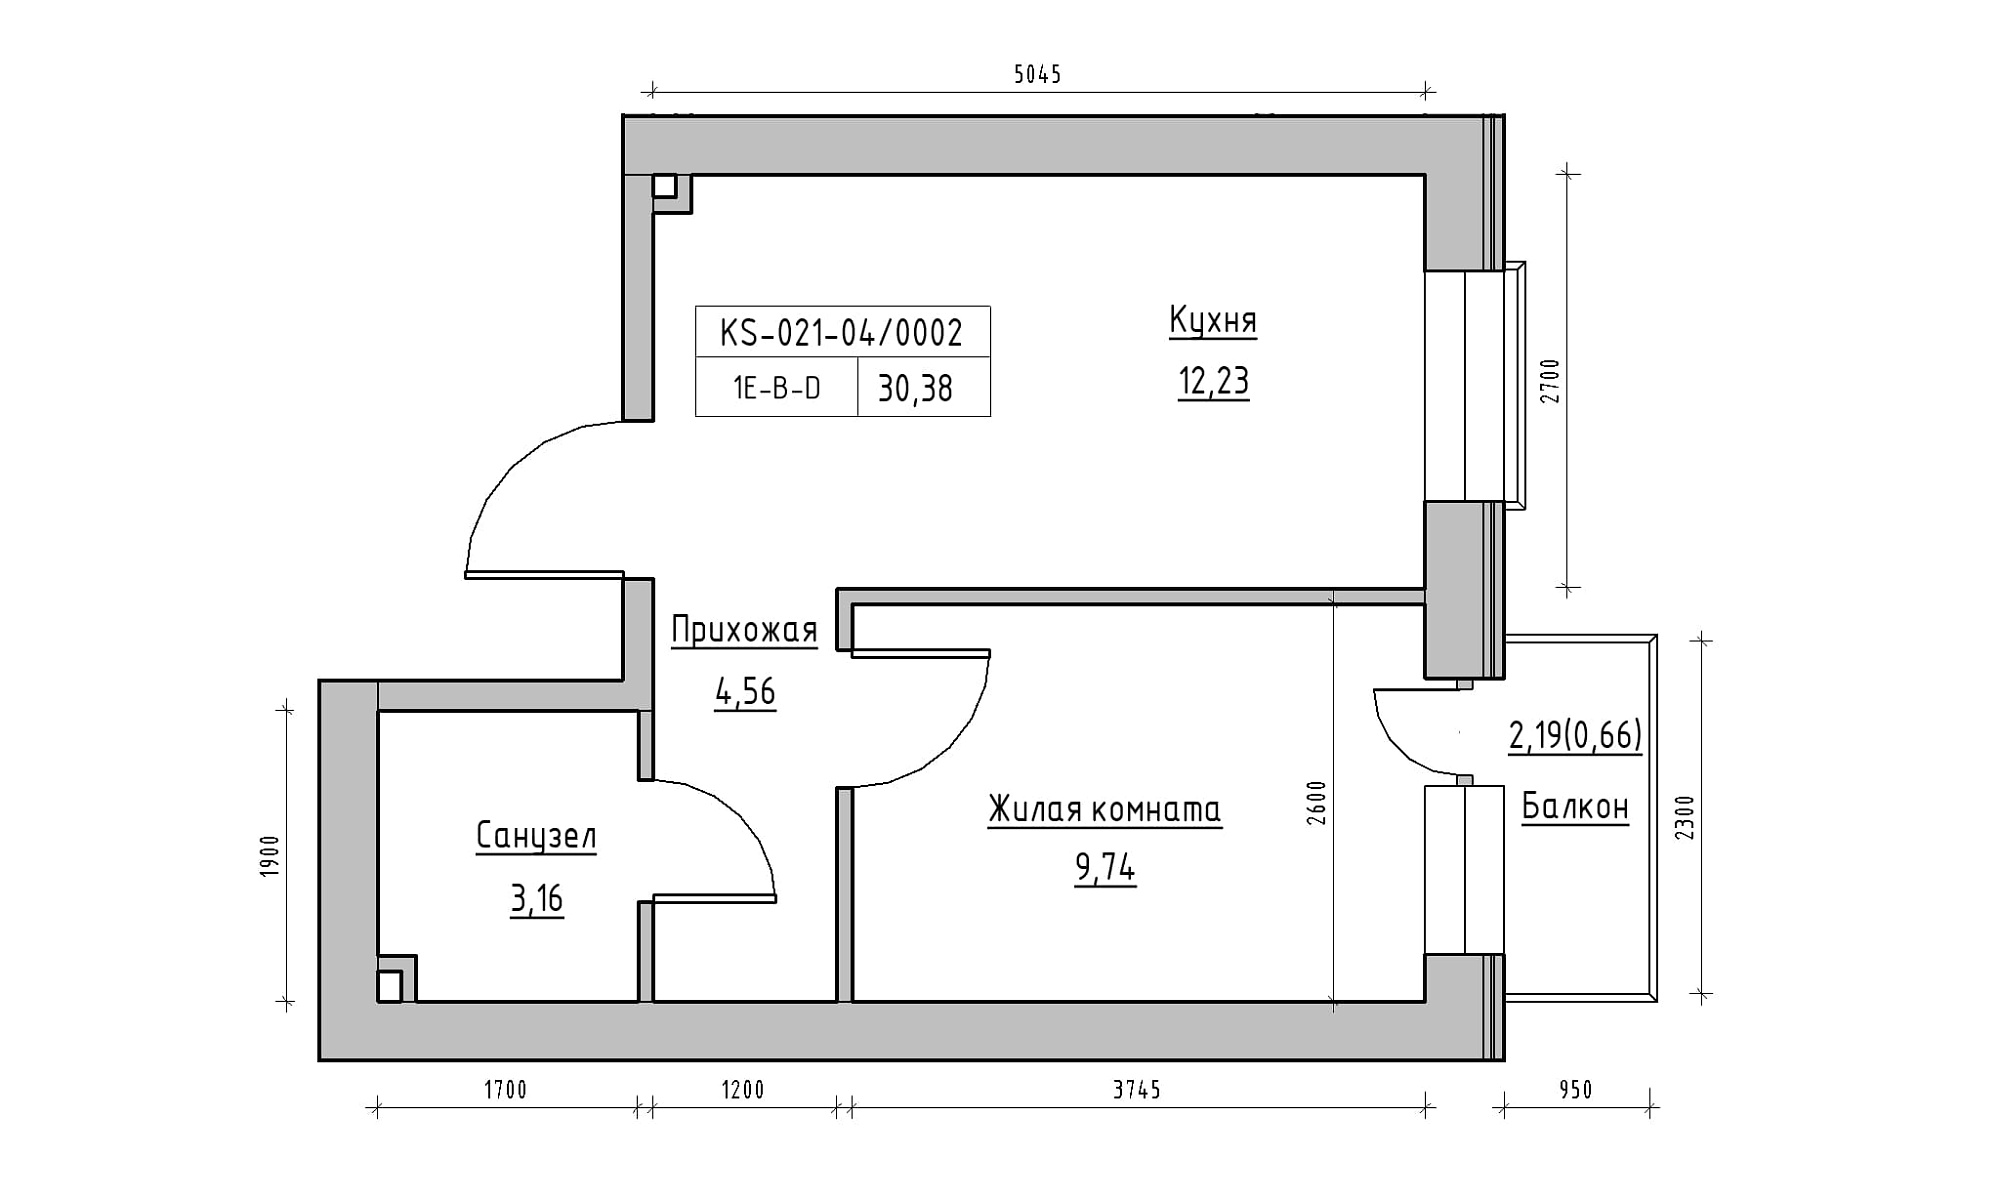 Planning 1-rm flats area 30.38m2, KS-021-04/0002.